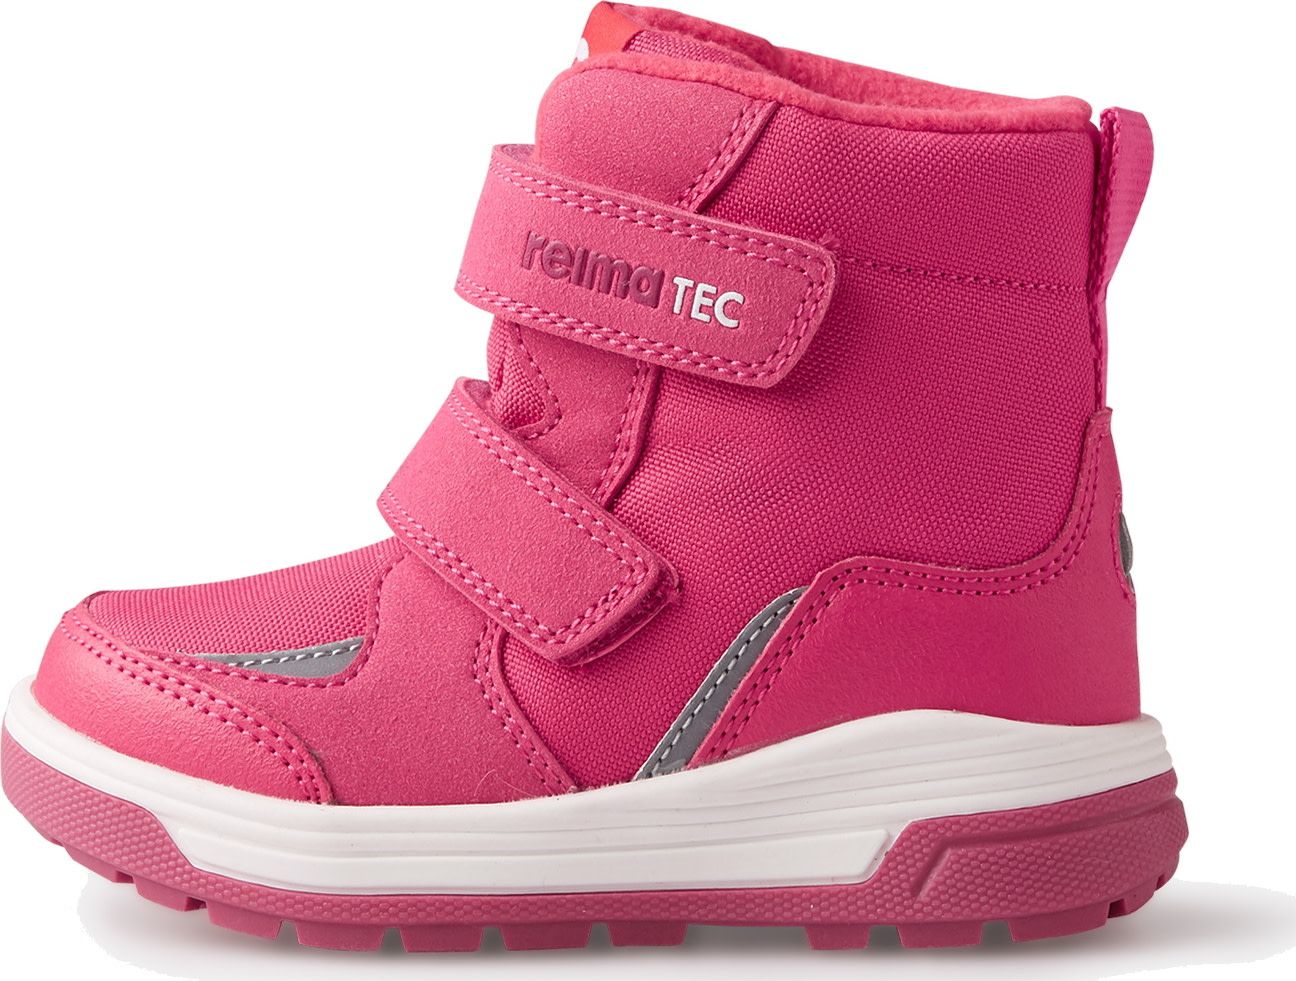 Kids' Reimatec Shoes Qing Azalea pink 3530